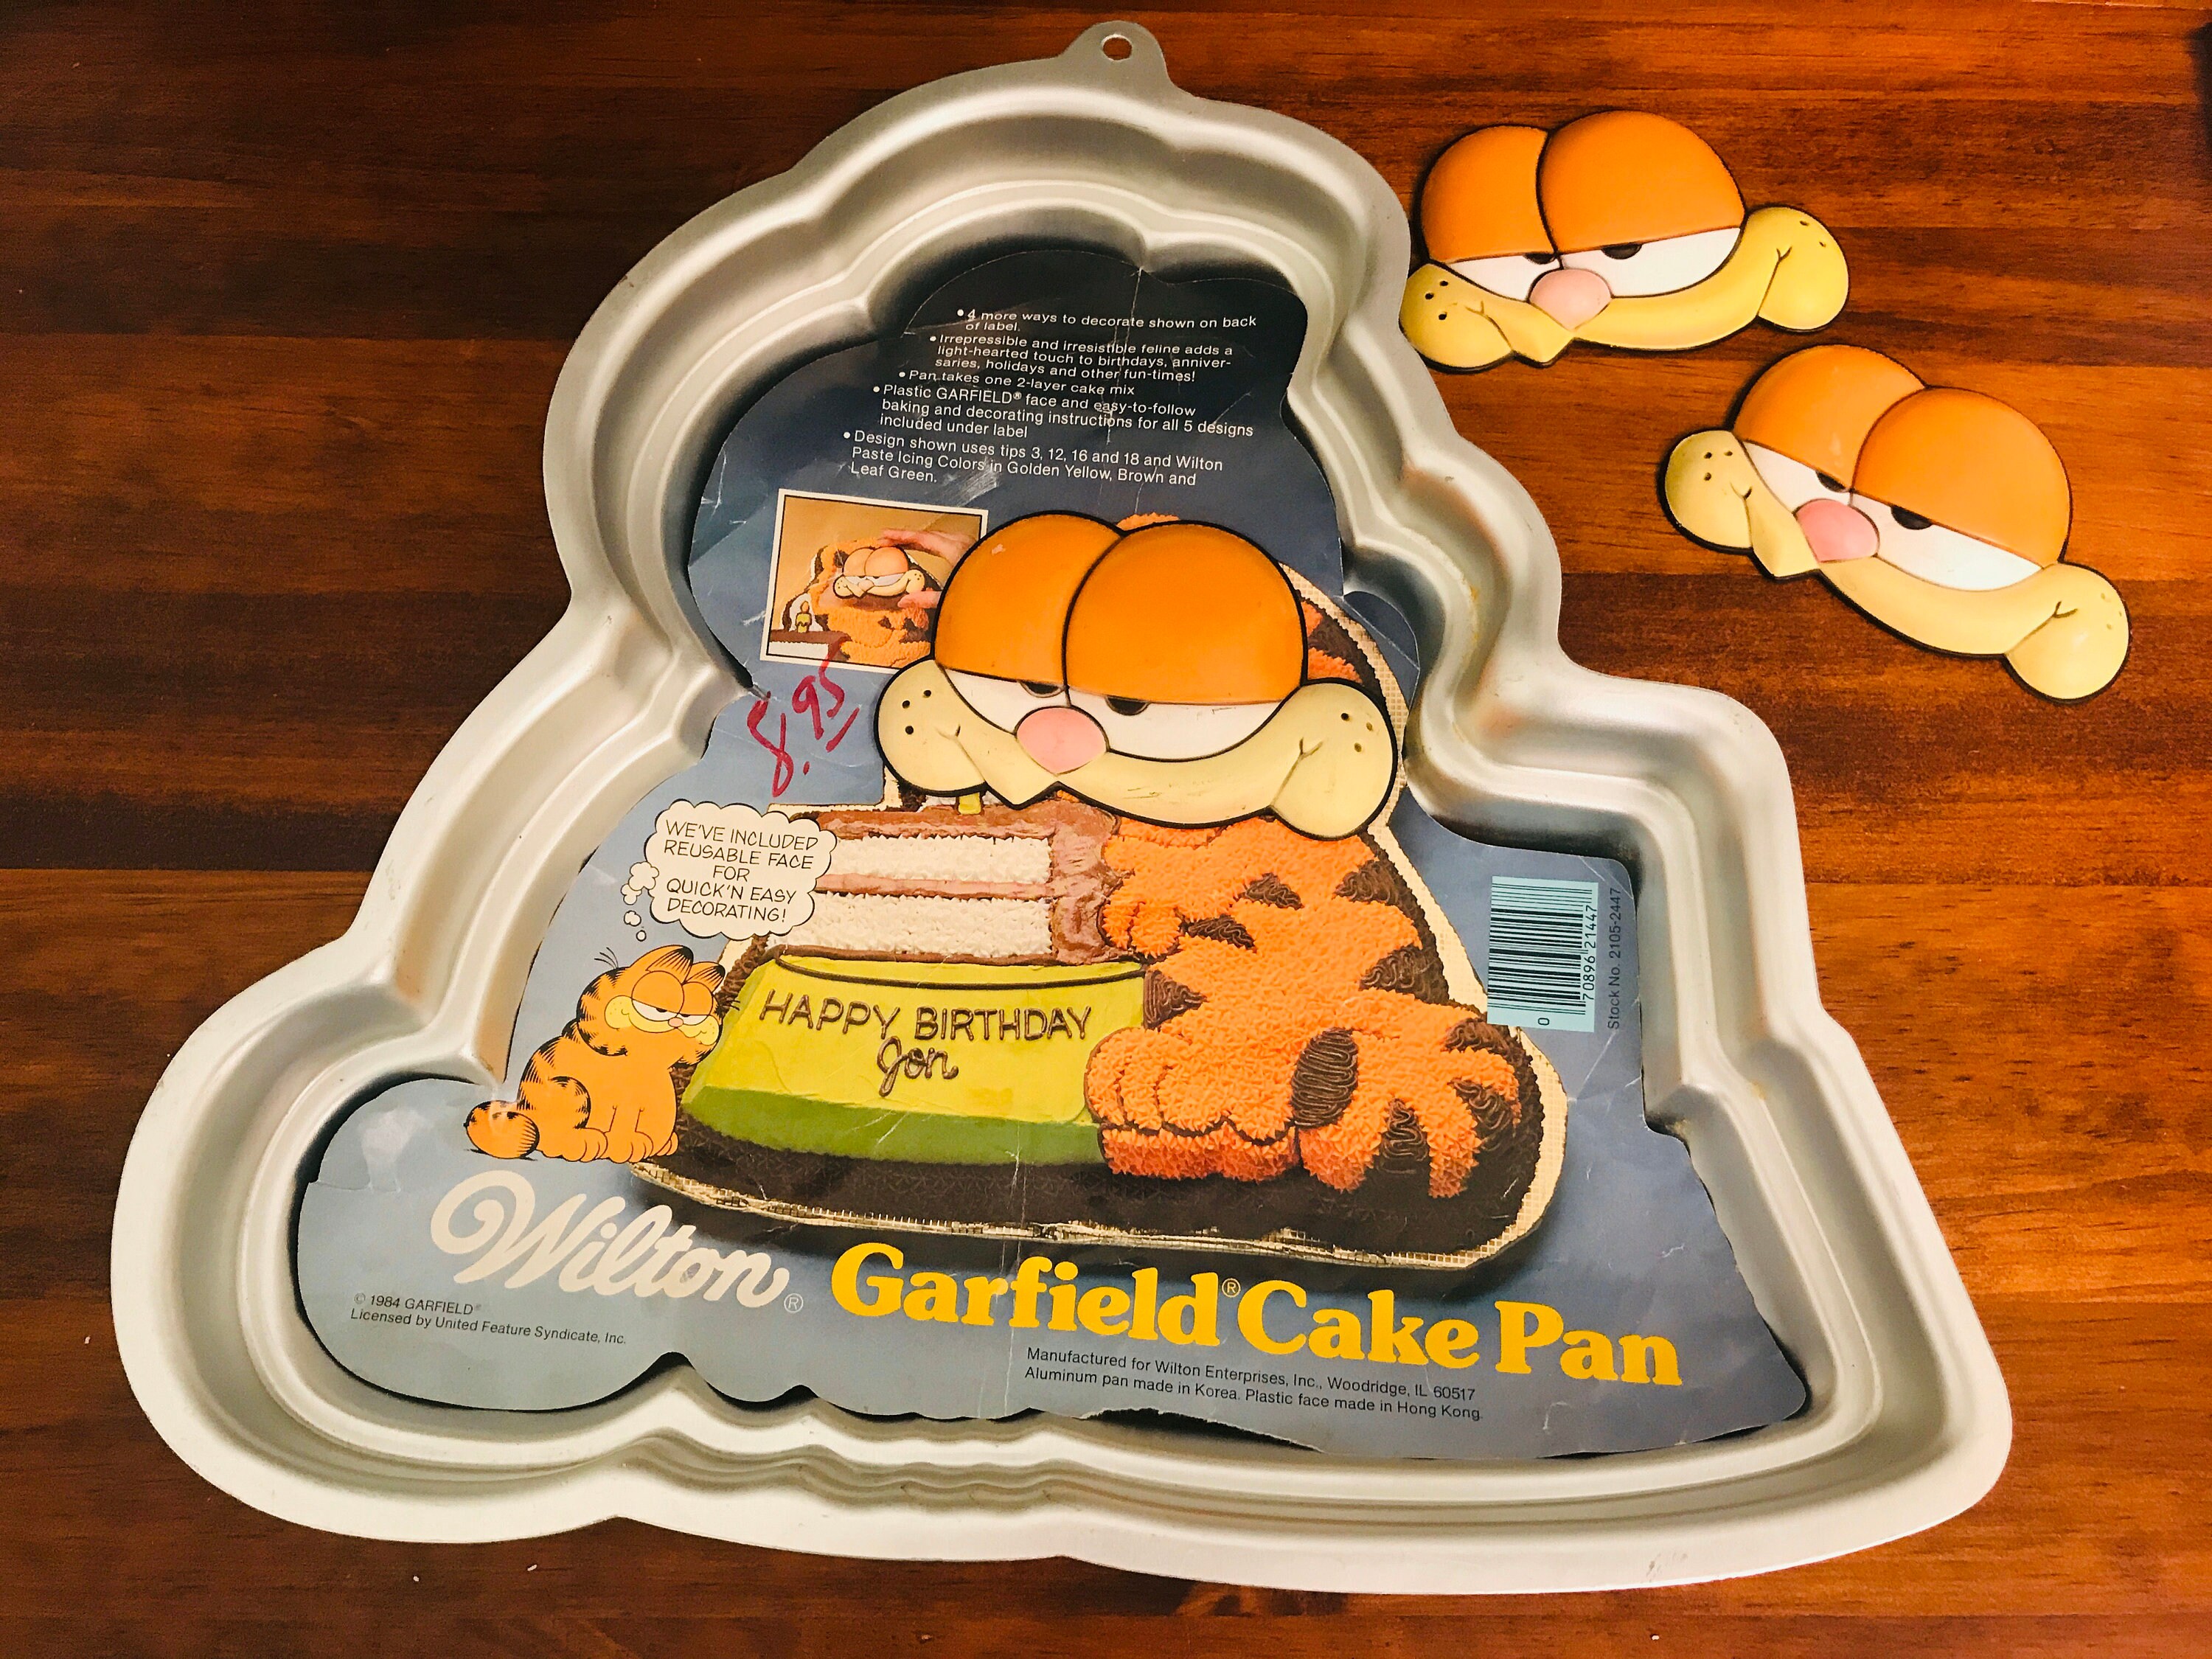 Wilton Garfield Cake Pan